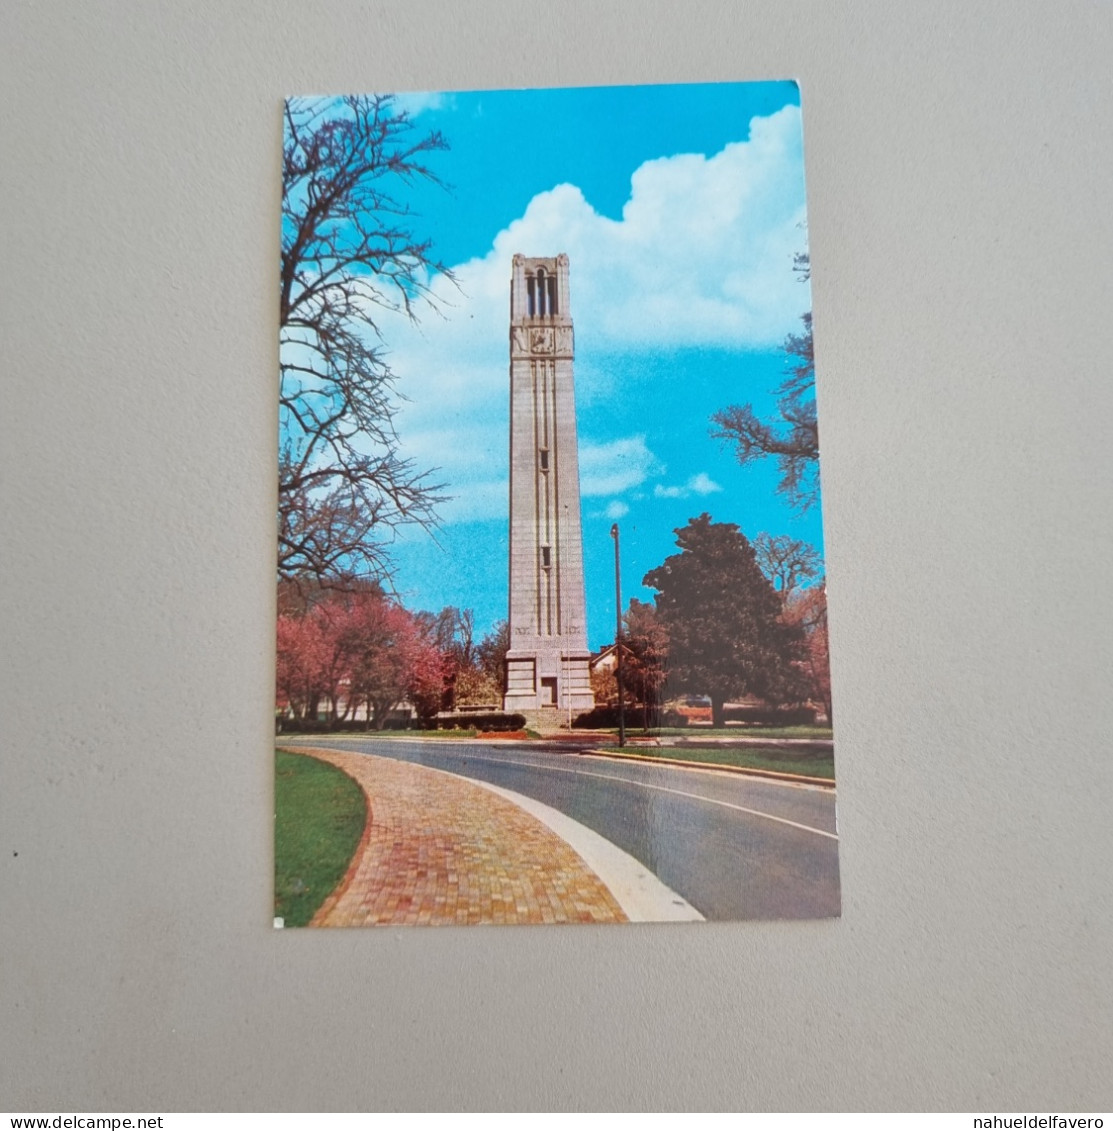 Uncirculated Postcard - NORTH CAROLINA STATE - Famous Clock Tower And War Memorial - Raleigh